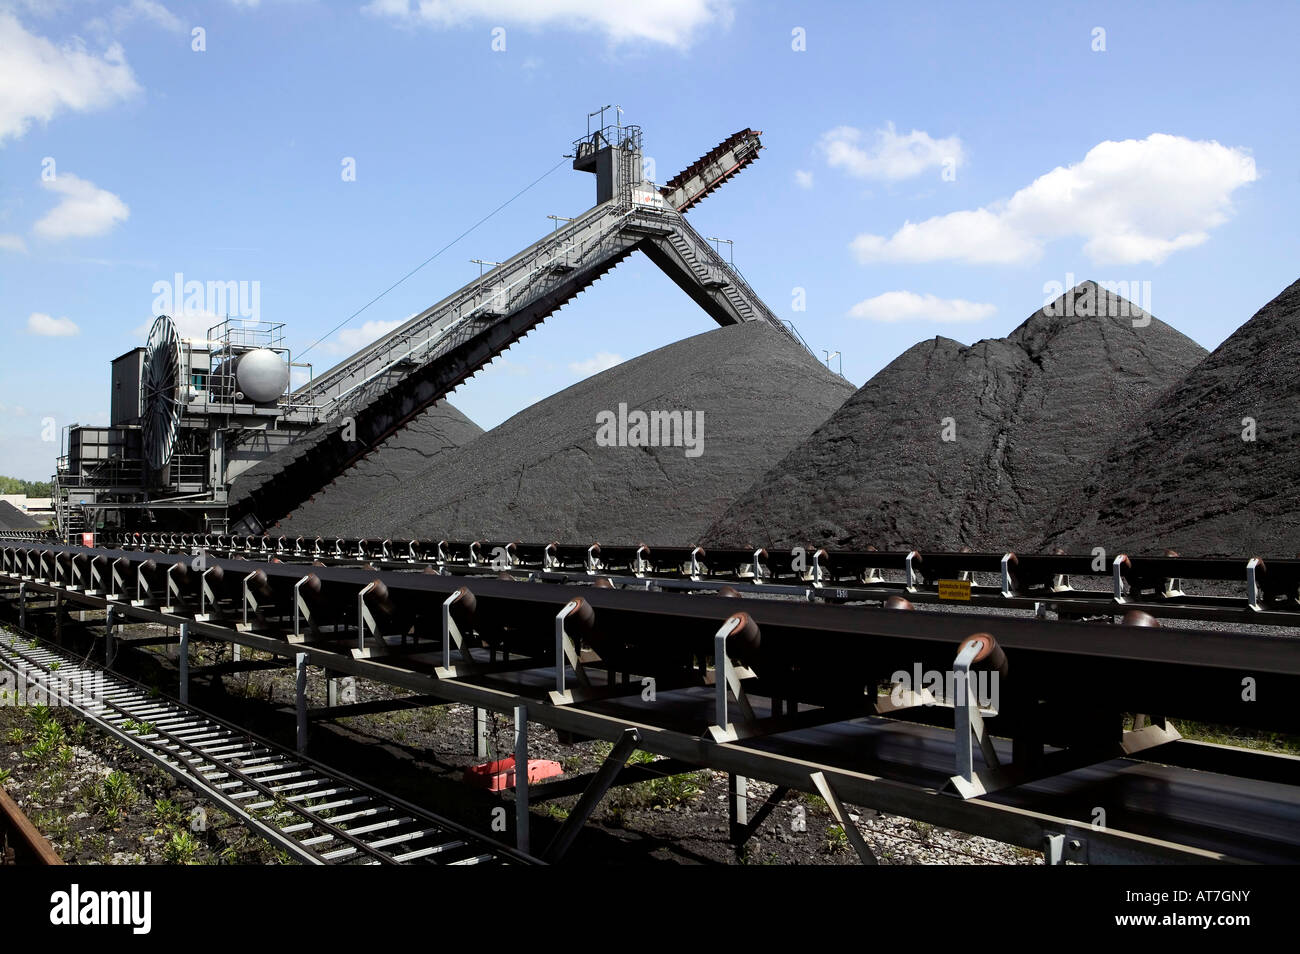 coal power supply Düsseldorf Germany Europe North Rhine Westphalia black work energy production pile storage mine crane band Stock Photo